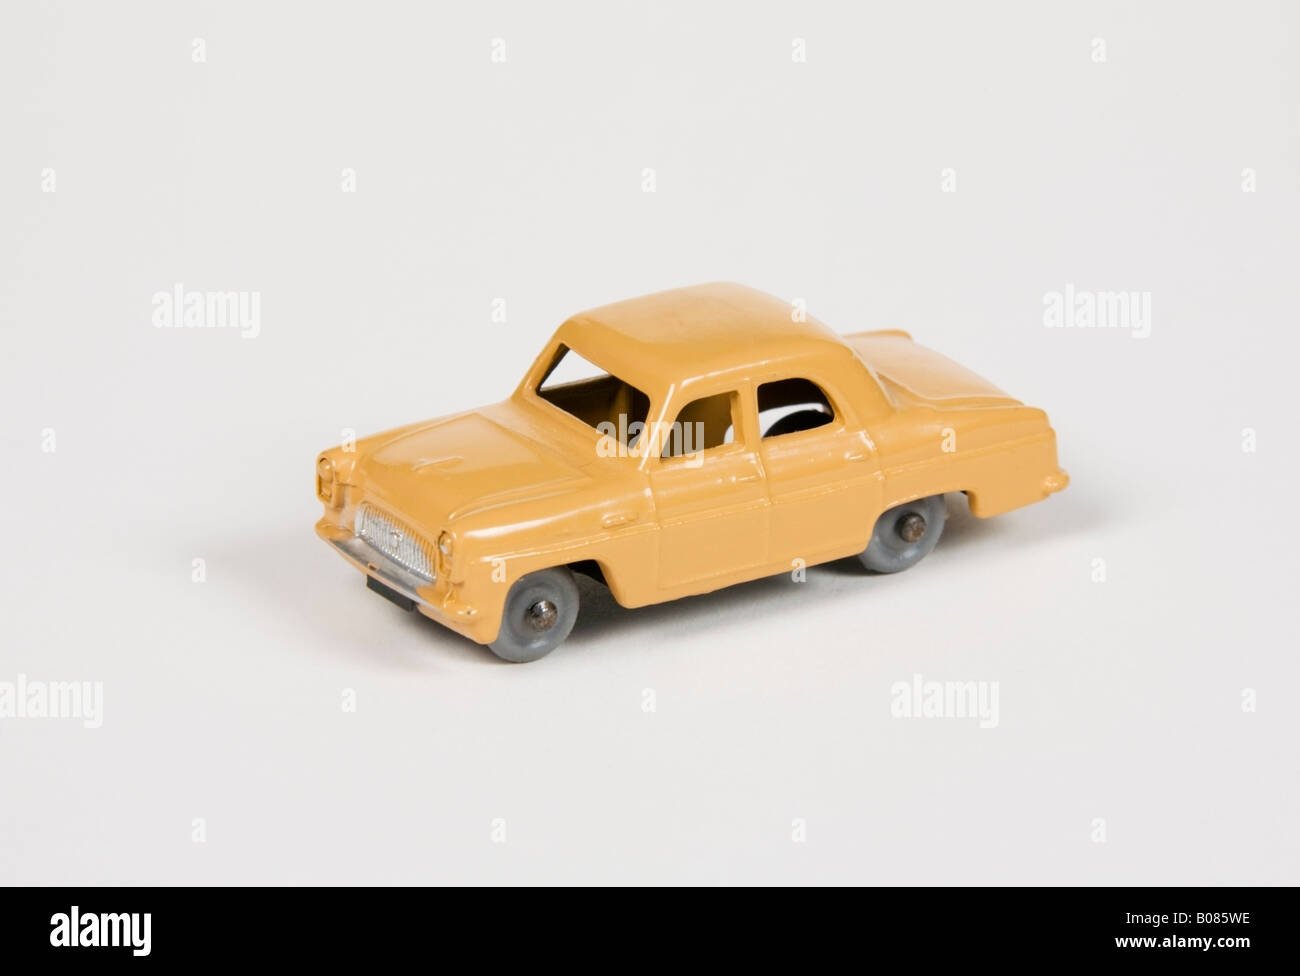 Dublo Dinky Ford Prefect toy car Stock Photo